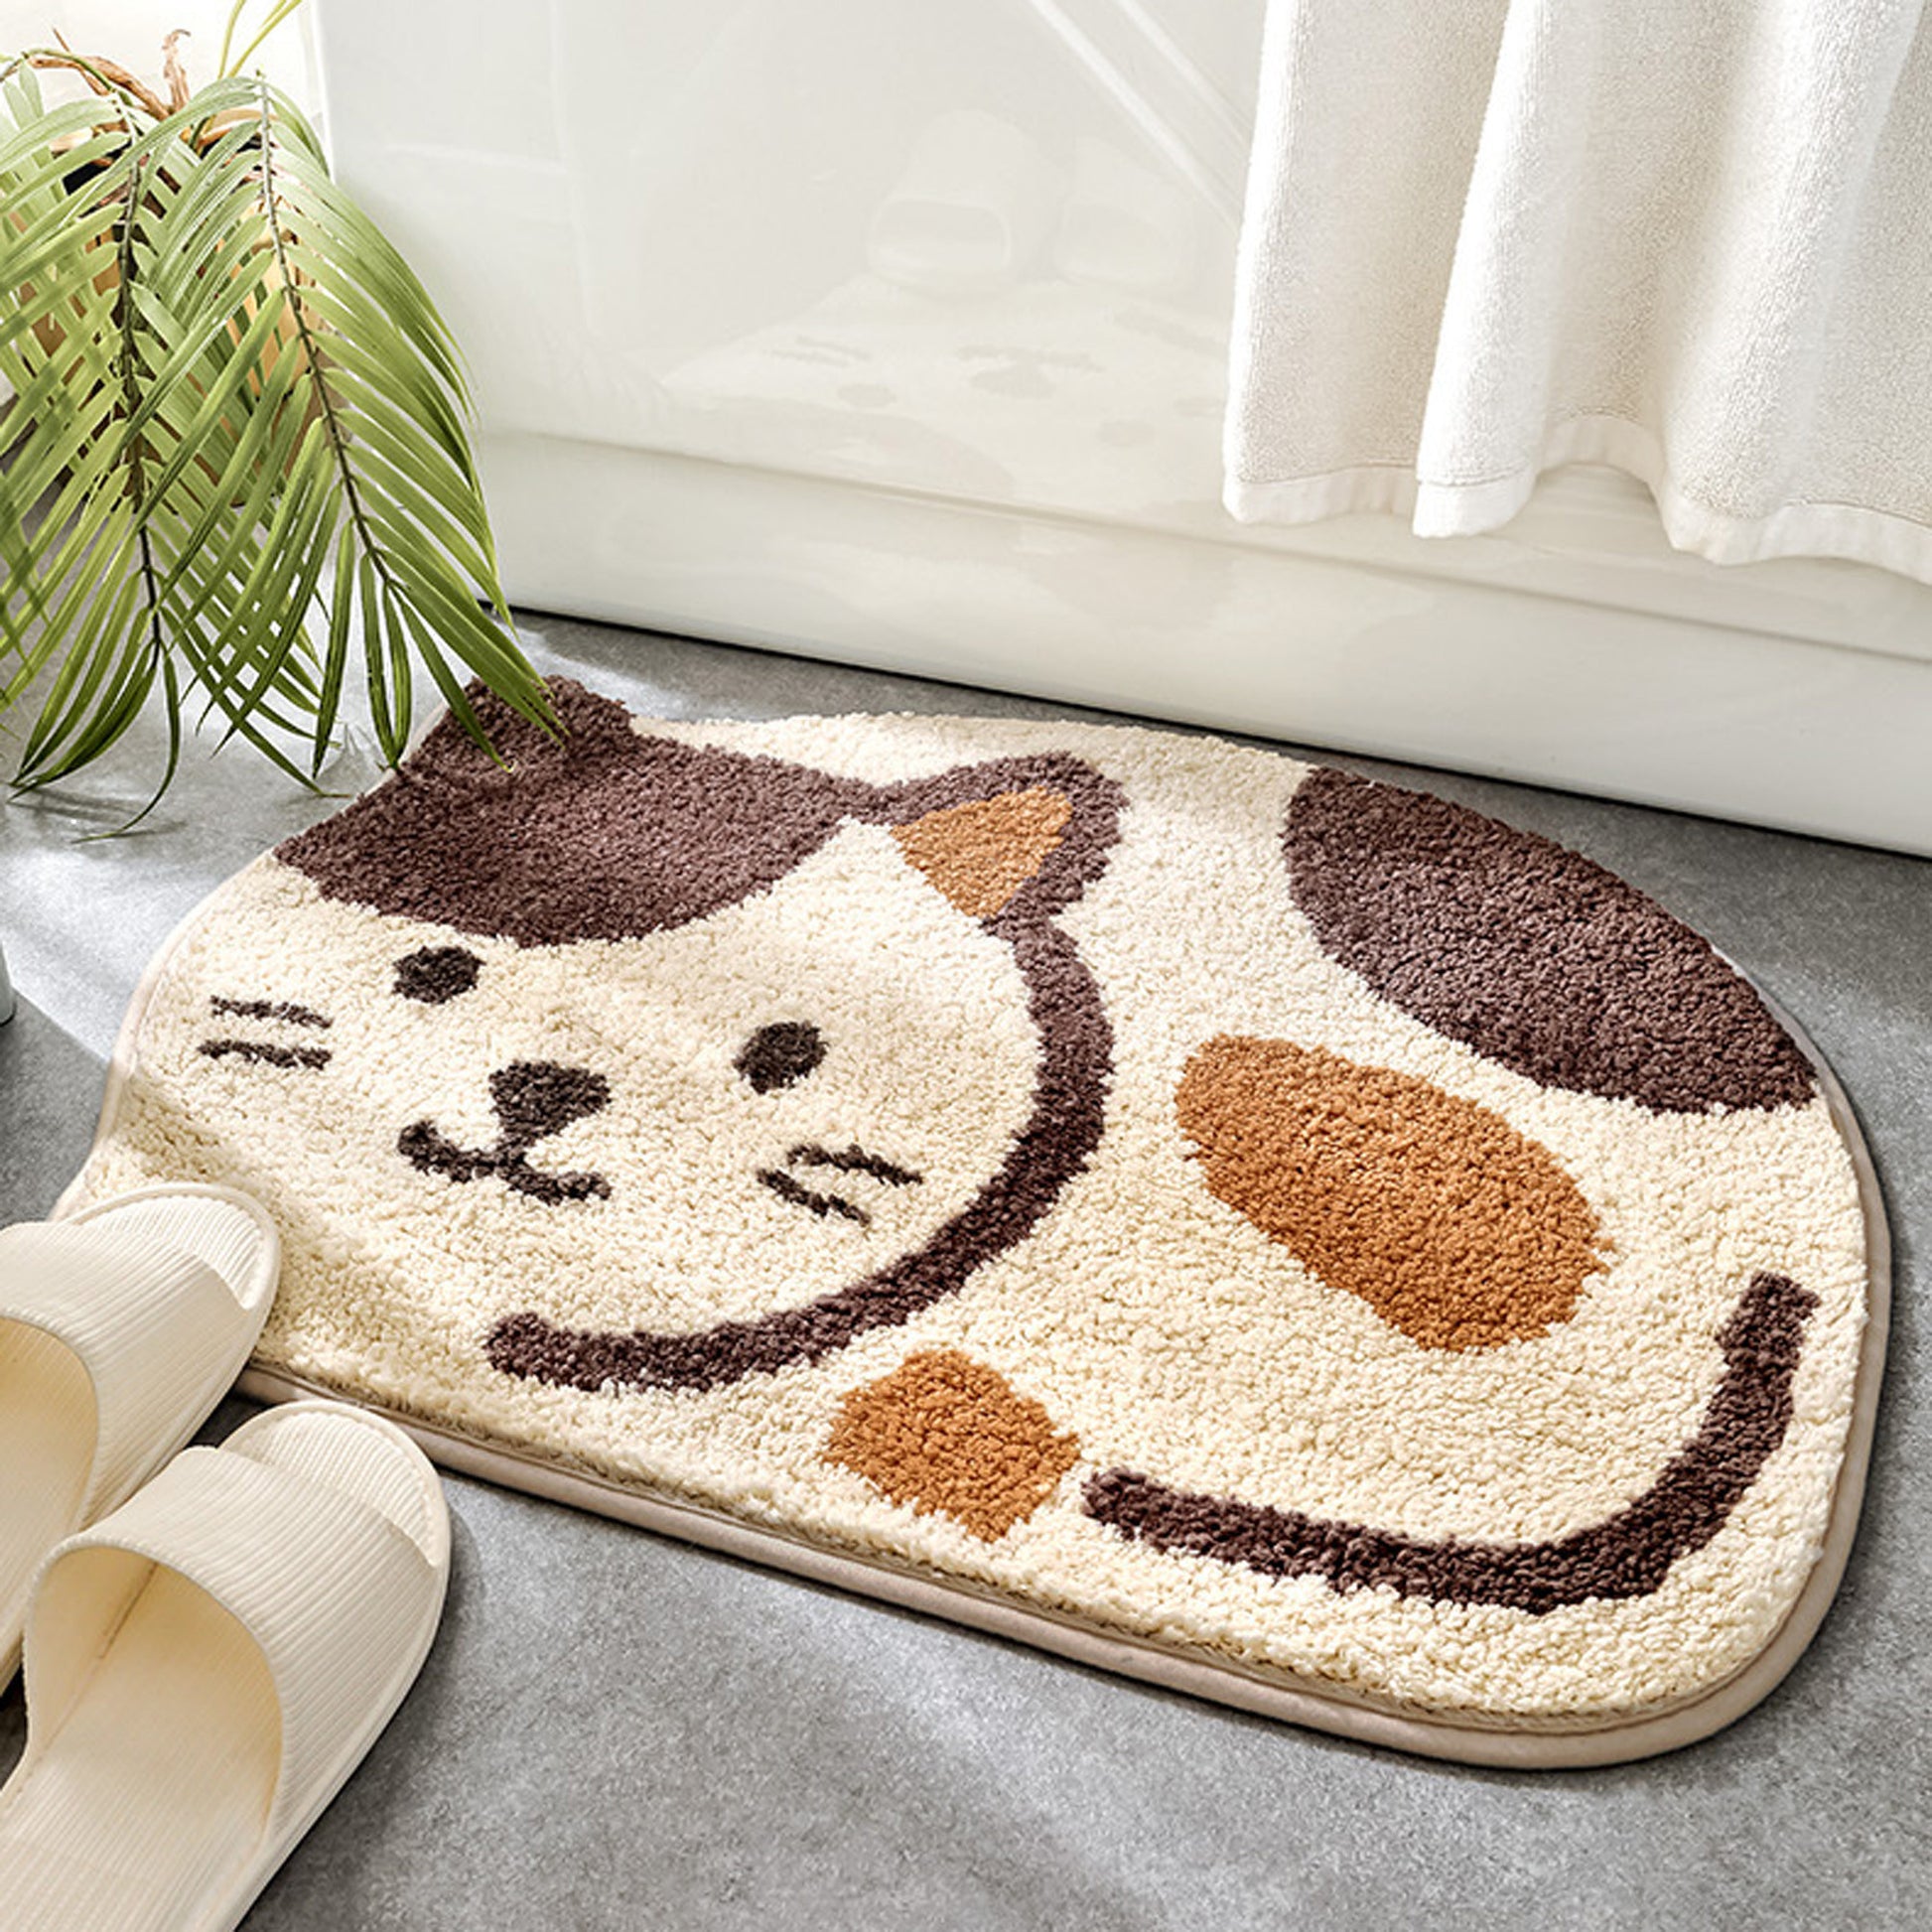 Cute Cat Doormat Carpet 26x 18 Cat Home Decor – Cute Cats Store